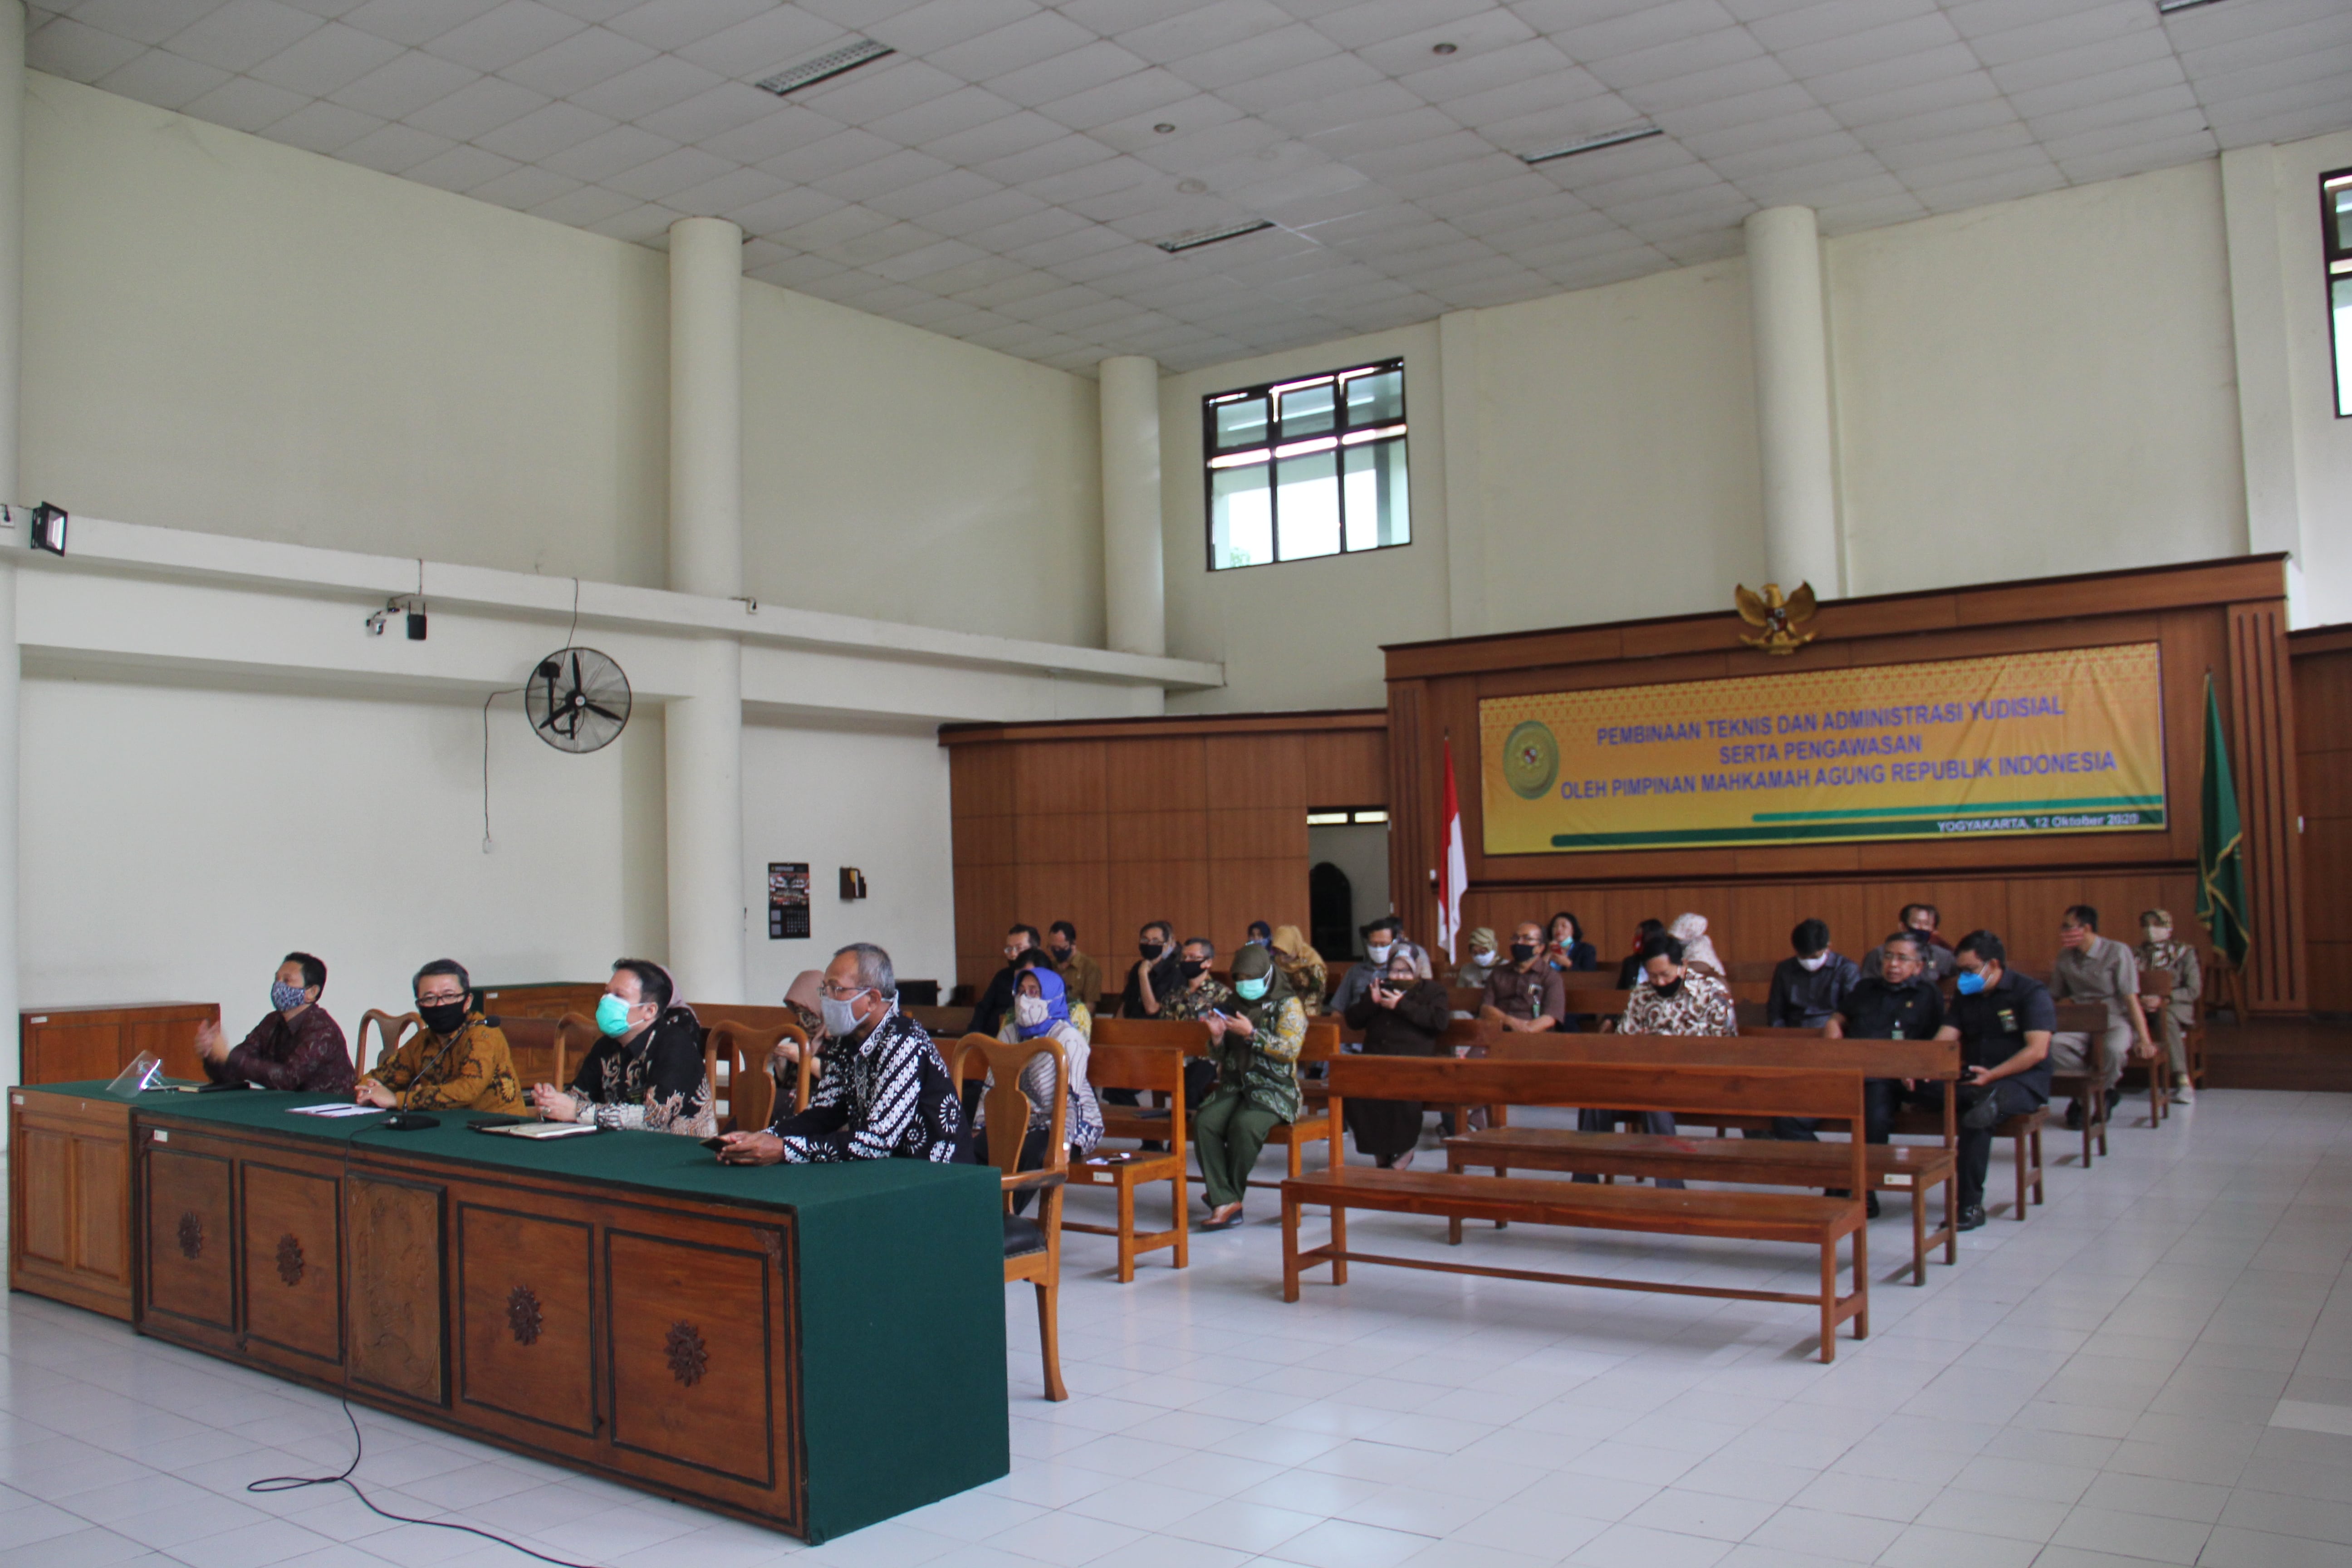 Pembinaan Teknis dan Administrasi Yudisial Serta Pengawasan oleh Pimpinan Mahkamah Agung Republik Indonesia secara Virtual